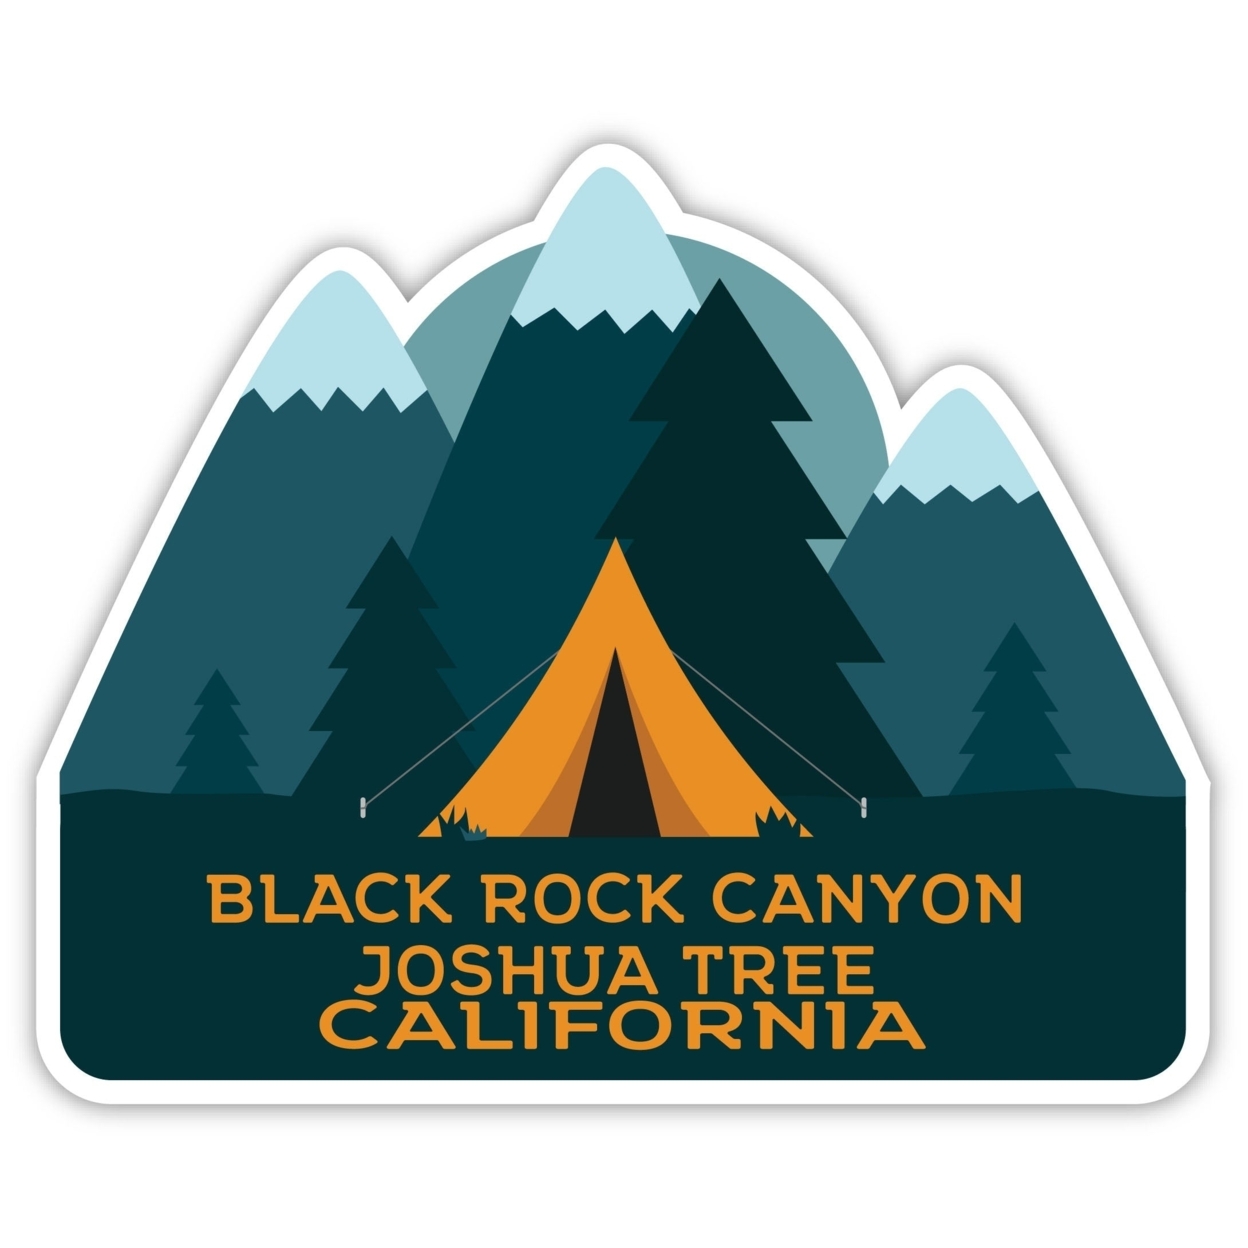 Black Rock Canyon Joshua Tree California Souvenir Decorative Stickers (Choose Theme And Size) - Single Unit, 8-Inch, Tent